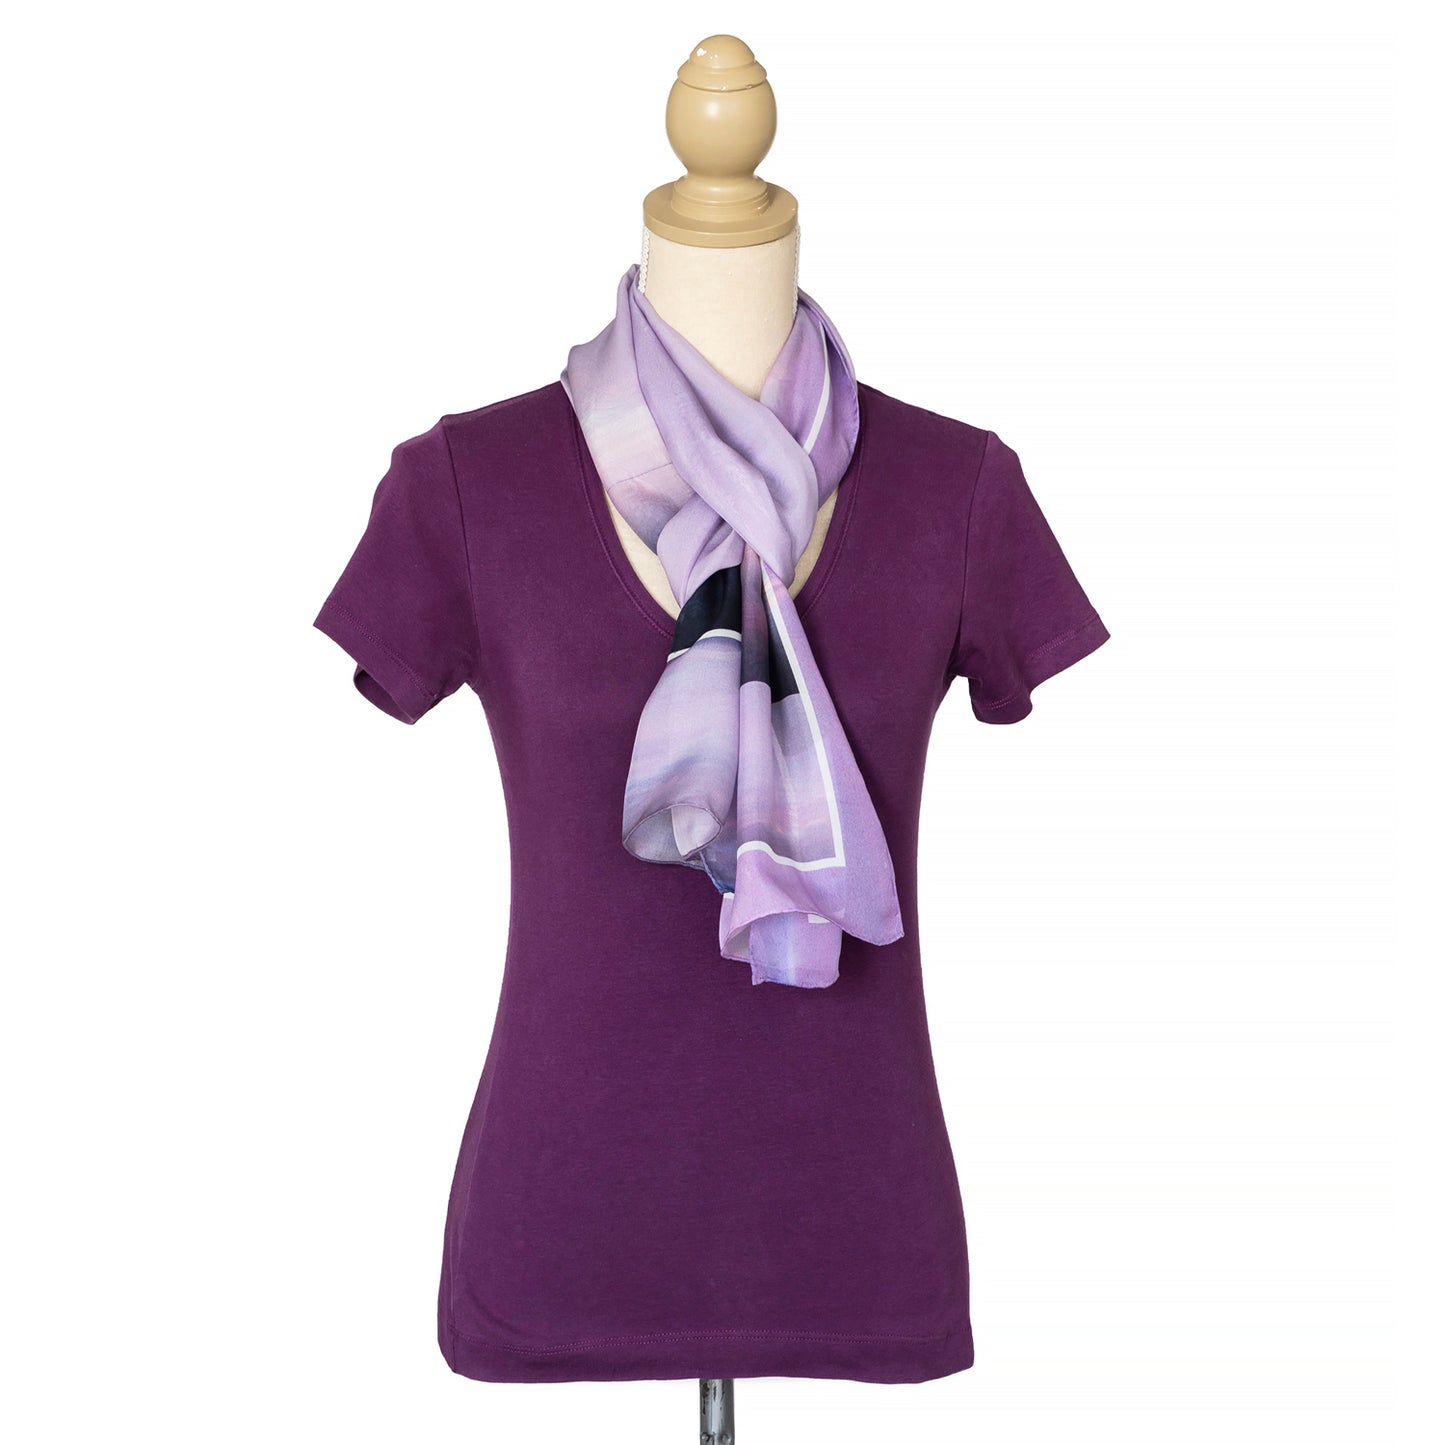 seaspray silk chiffon scarf by seahorse silks with purple top